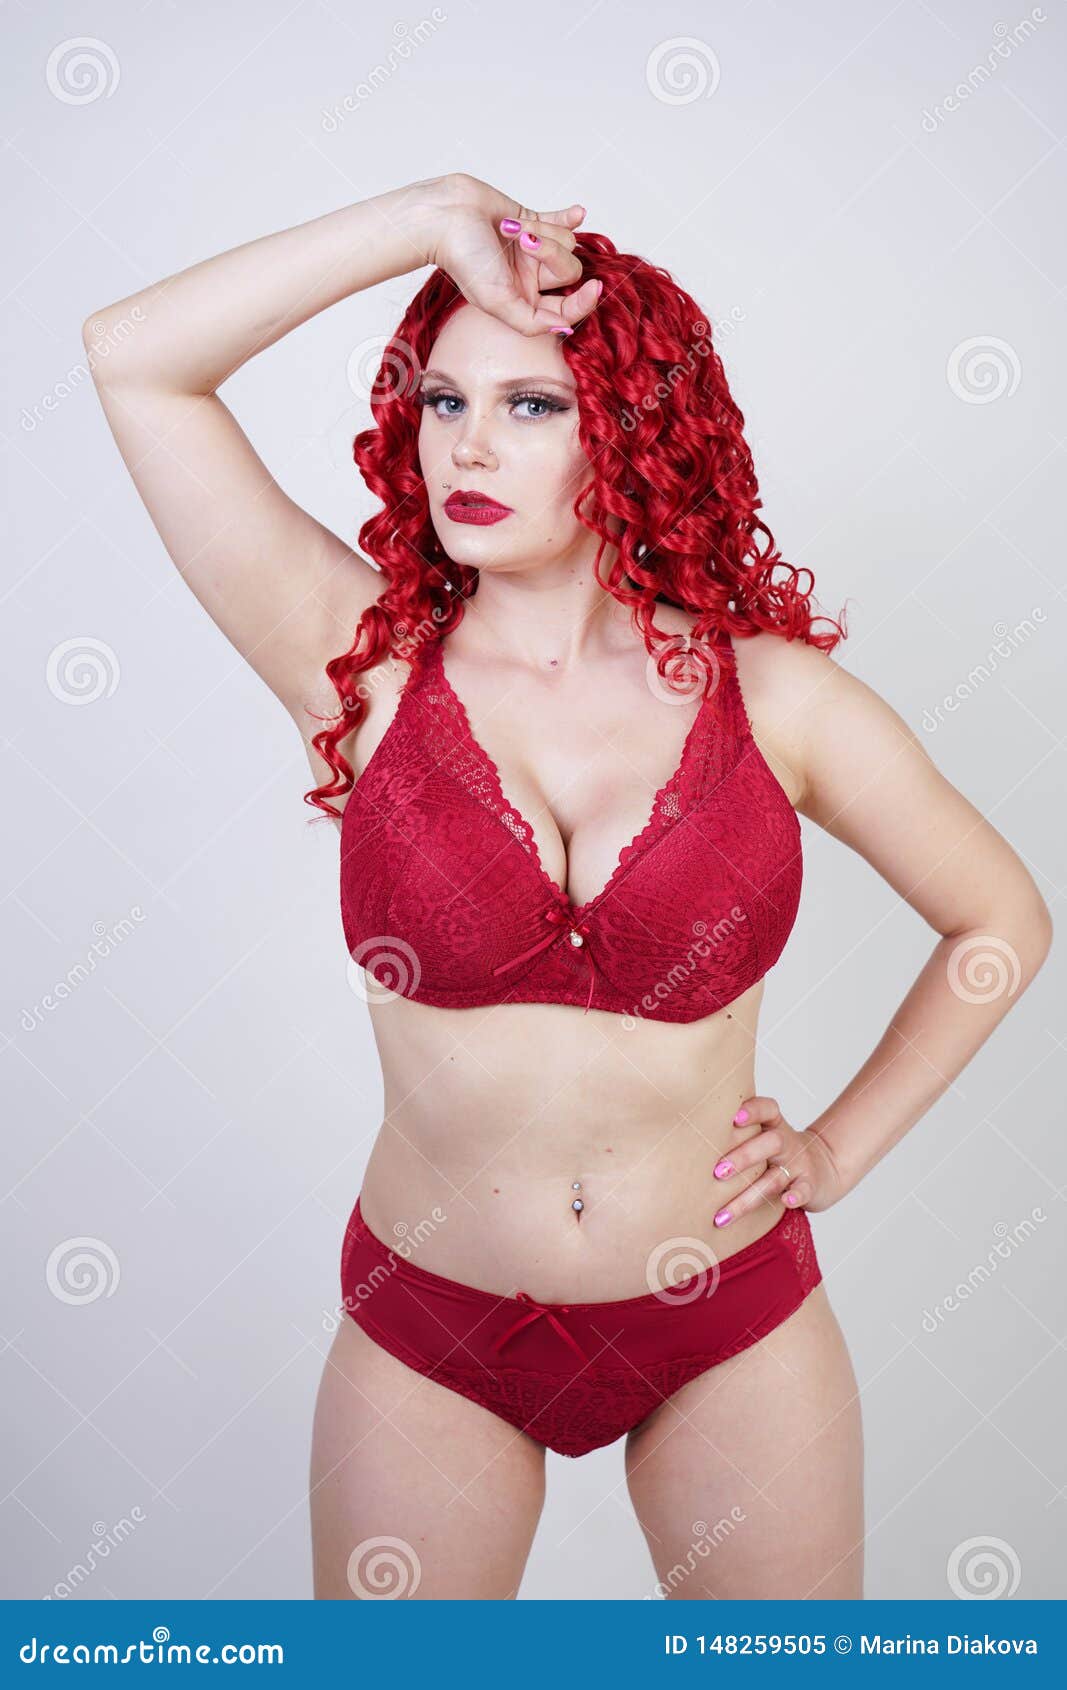 alex rutman recommends Sexy Hot Curvy Girls